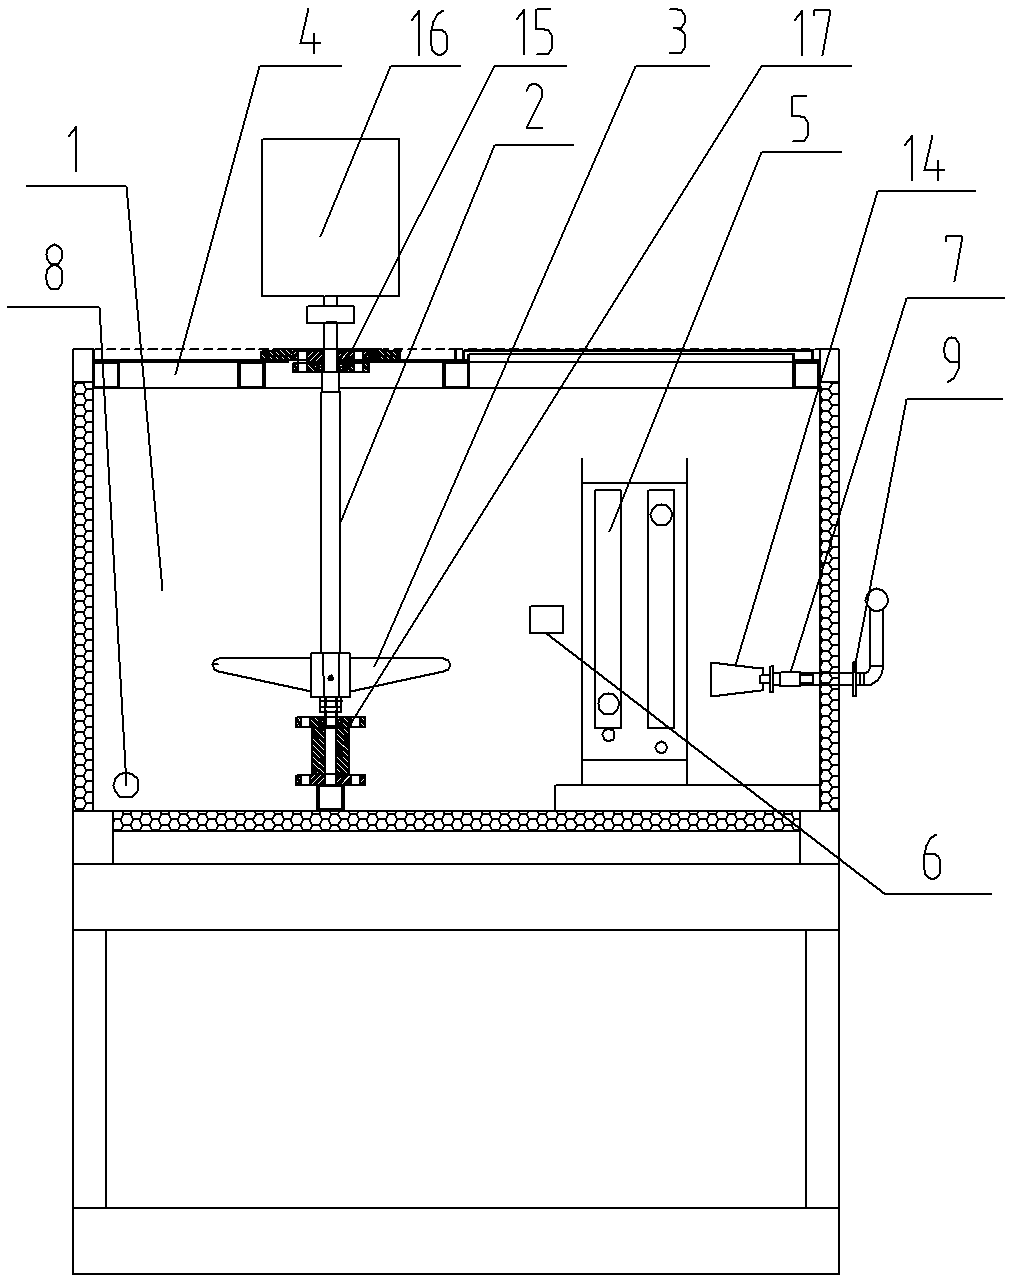 Alkali liquid preparation box device